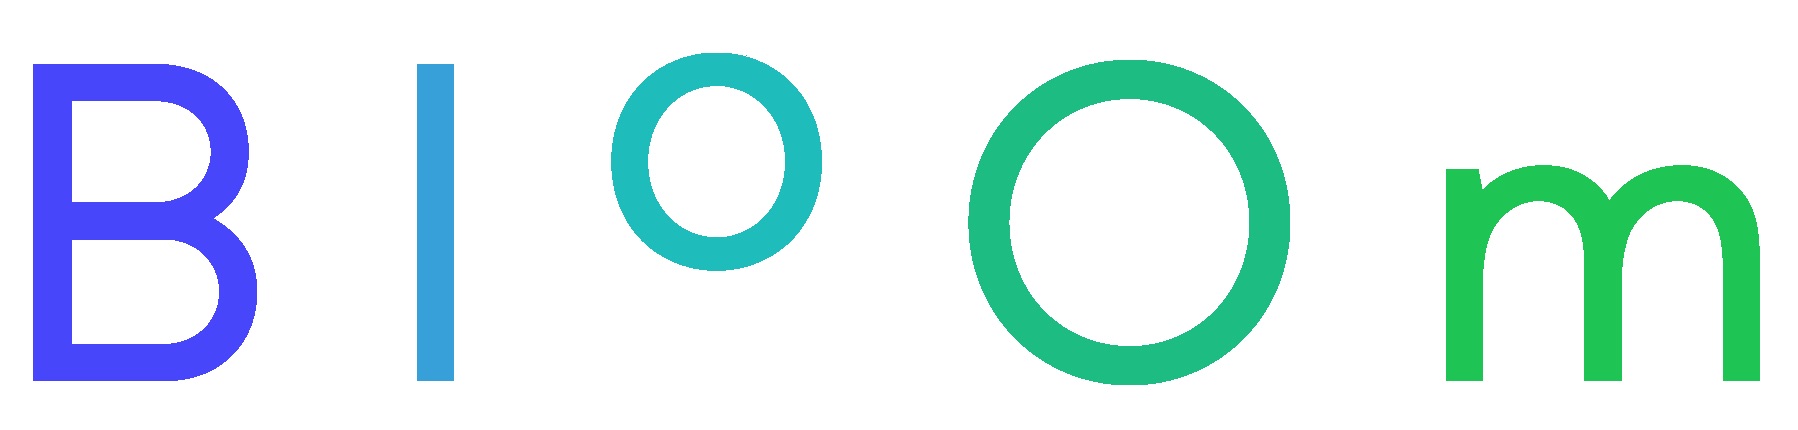 Bloom-logo